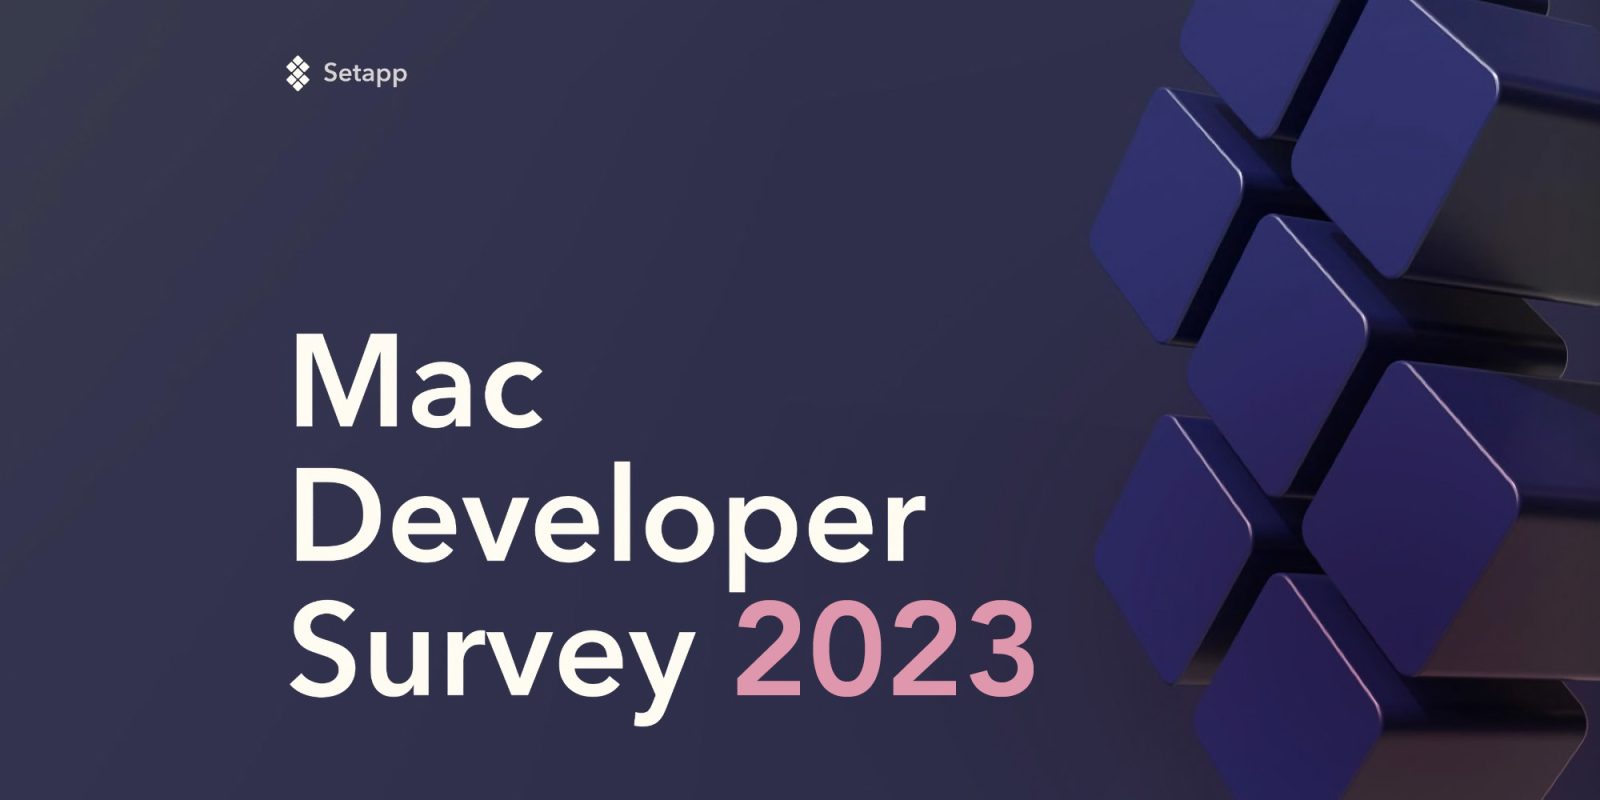 Setapp Mac Developer Survey